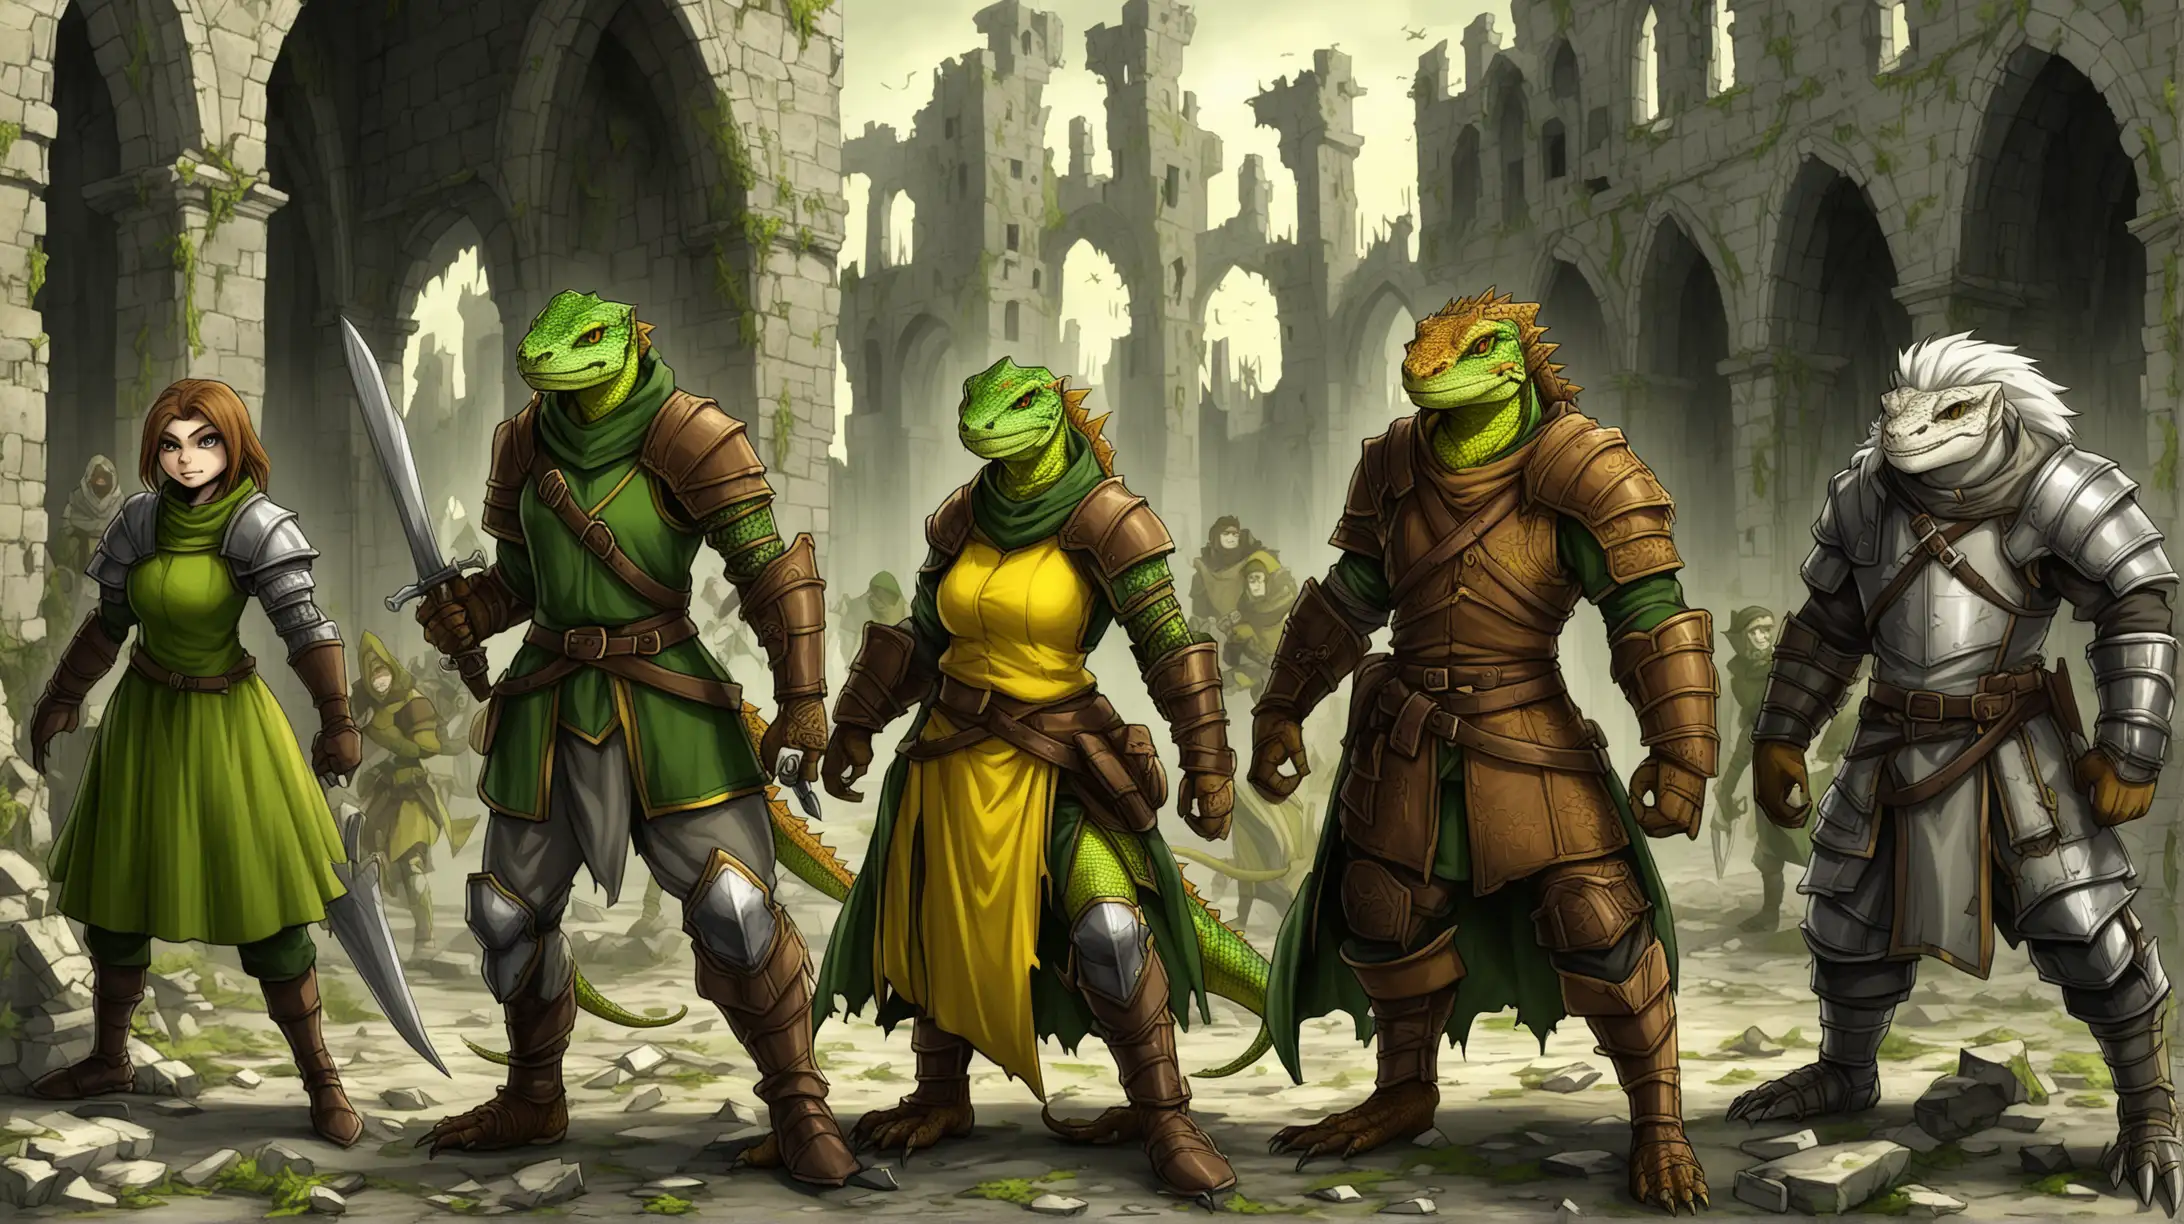 hybrid lizard men, hybrid lizard women, brown green gray yellow, rogues, warrior, furry, ruins, Medieval fantasy